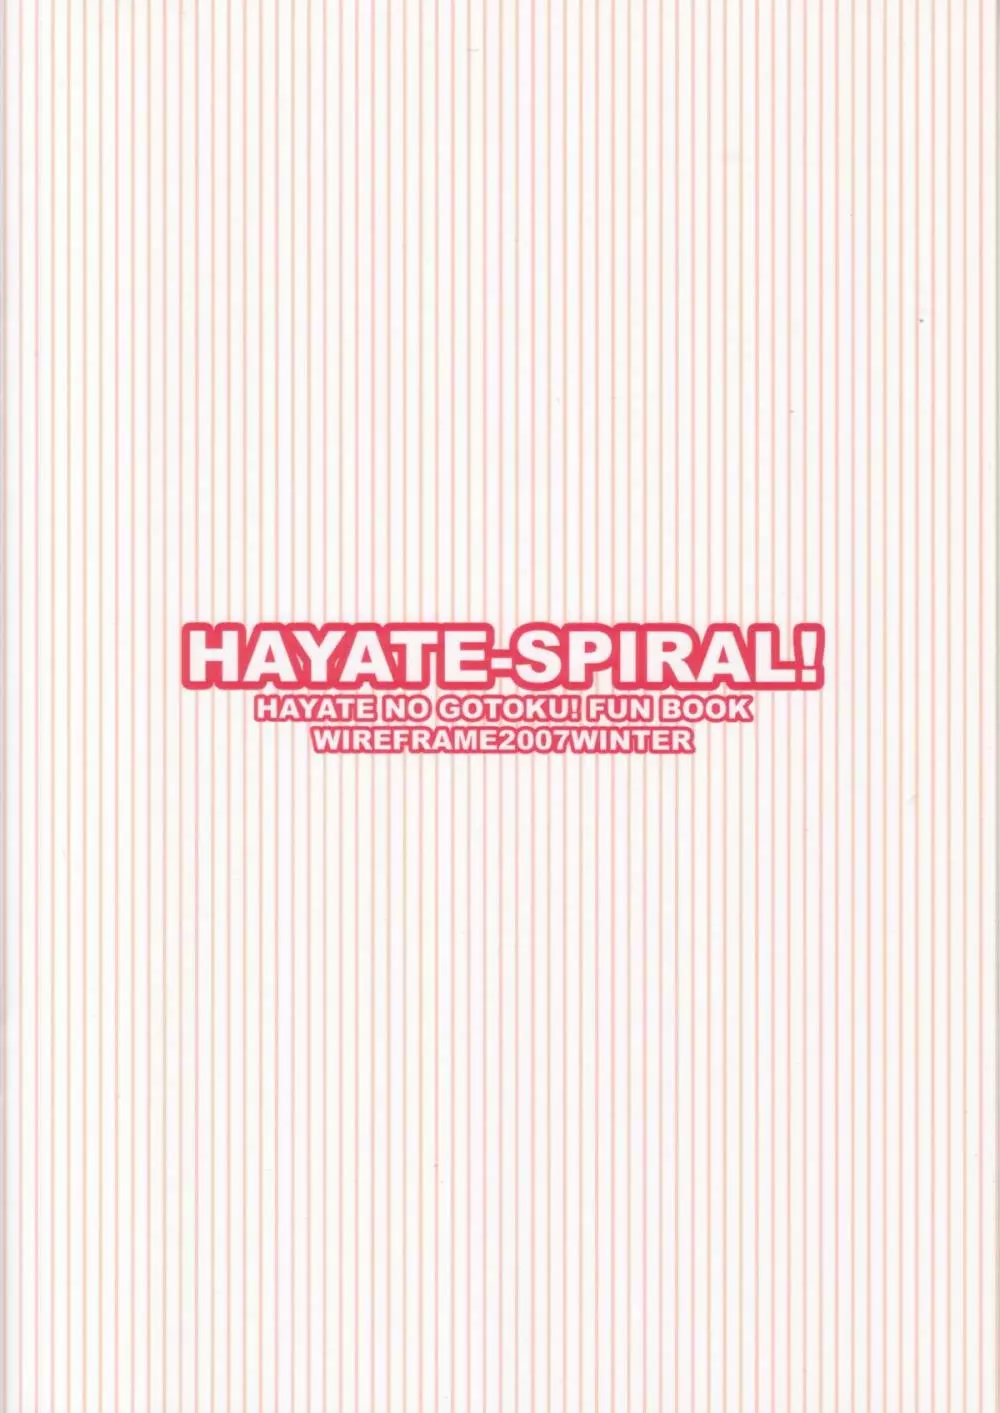 HAYATE-SPIRAL! - page12